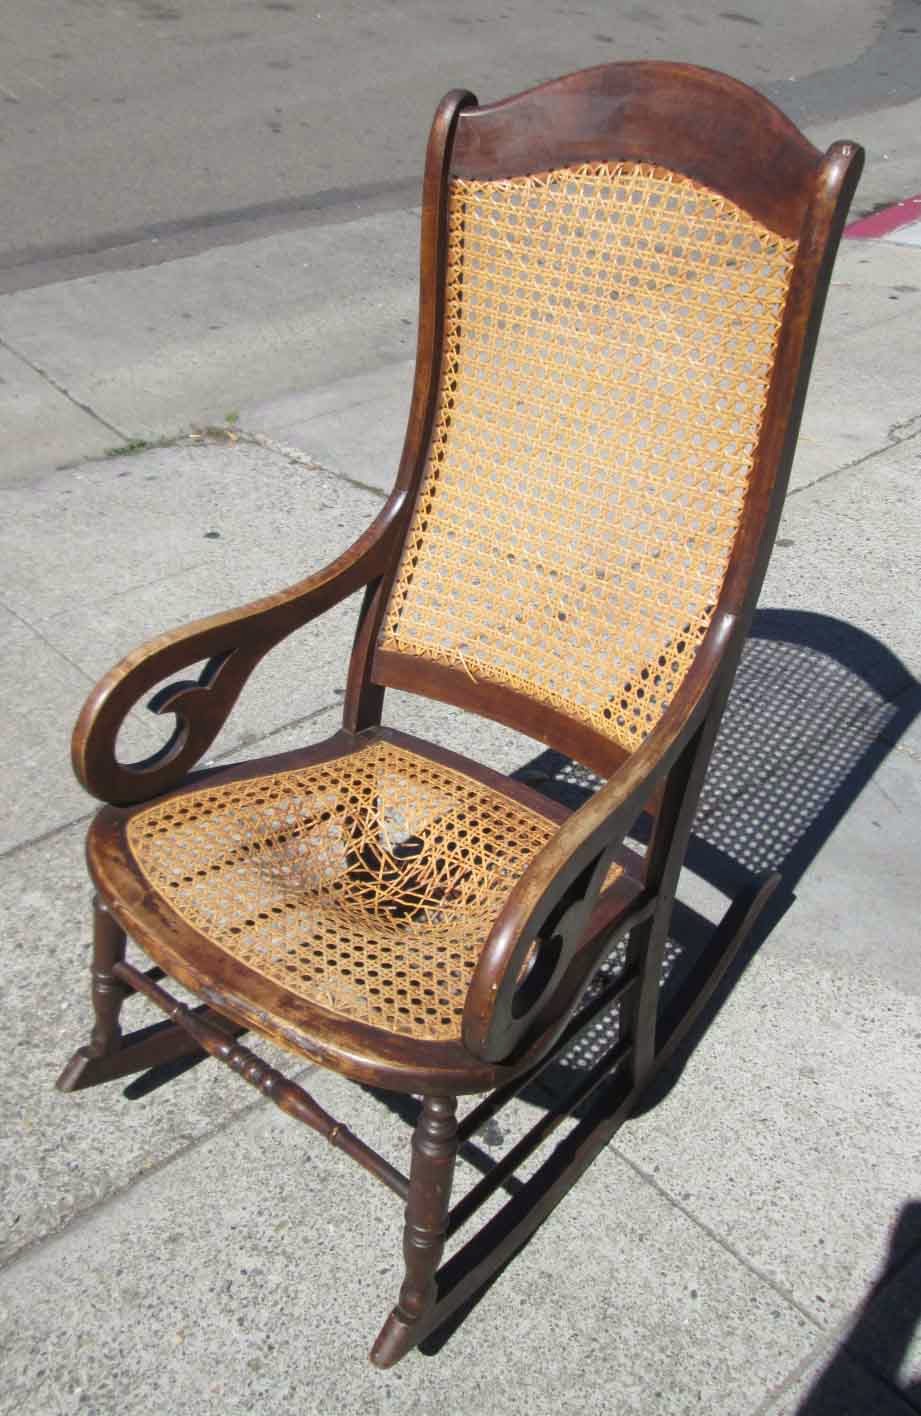 UHURU FURNITURE & COLLECTIBLES: SOLD Antique Cane Rocking Chair - $20